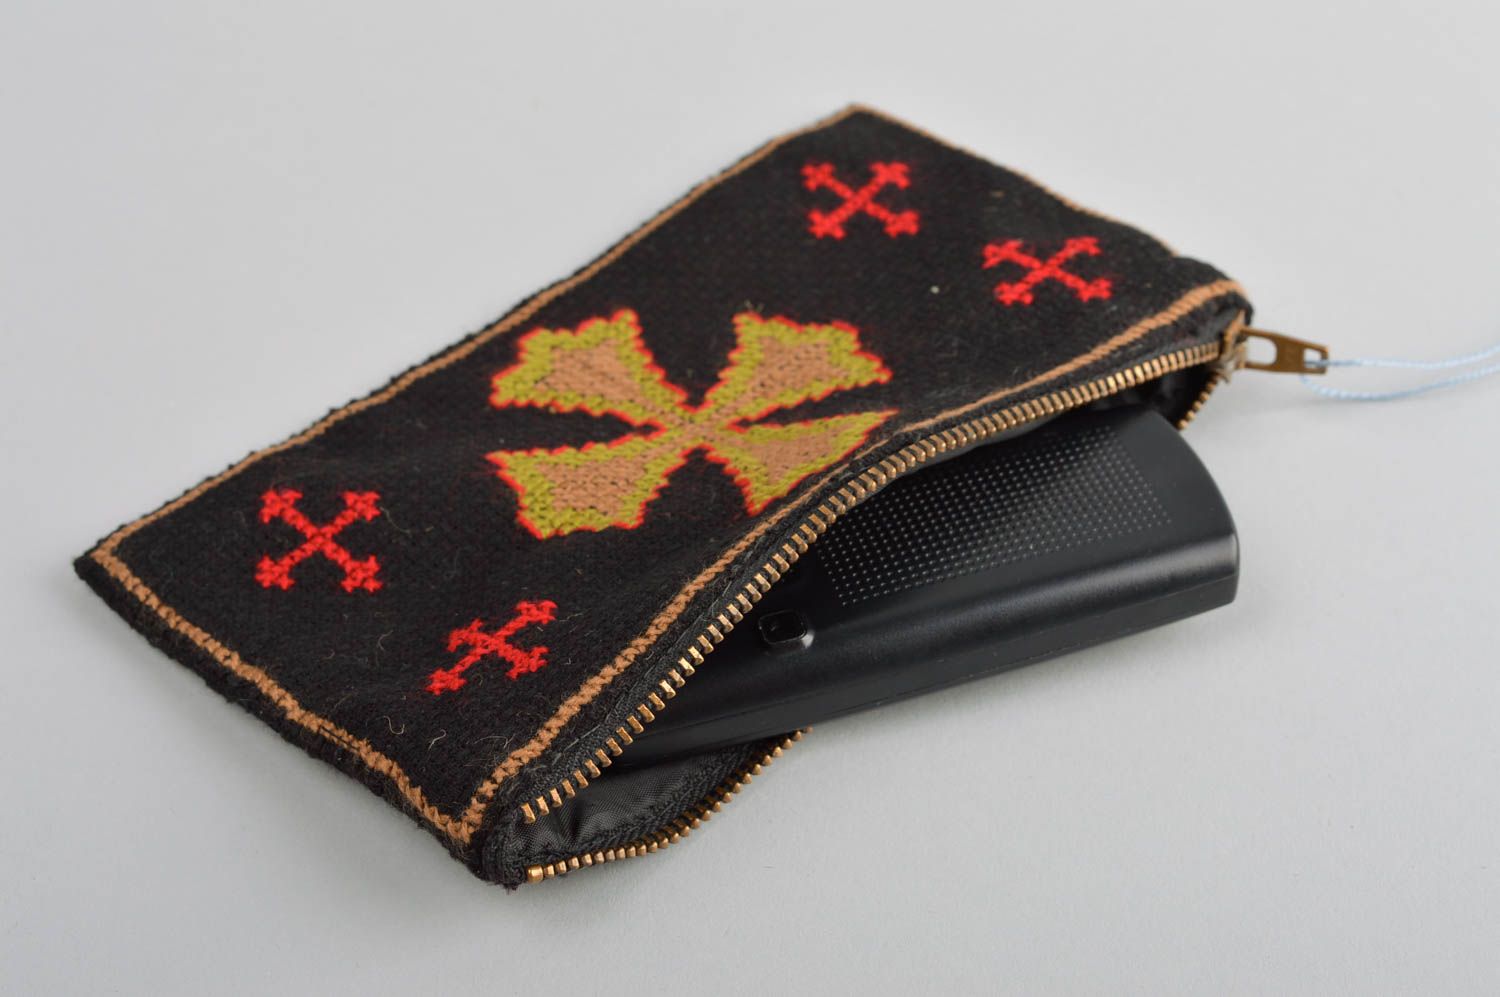 Beautiful handmade fabric phone case fashion gadget accessories gift ideas photo 5